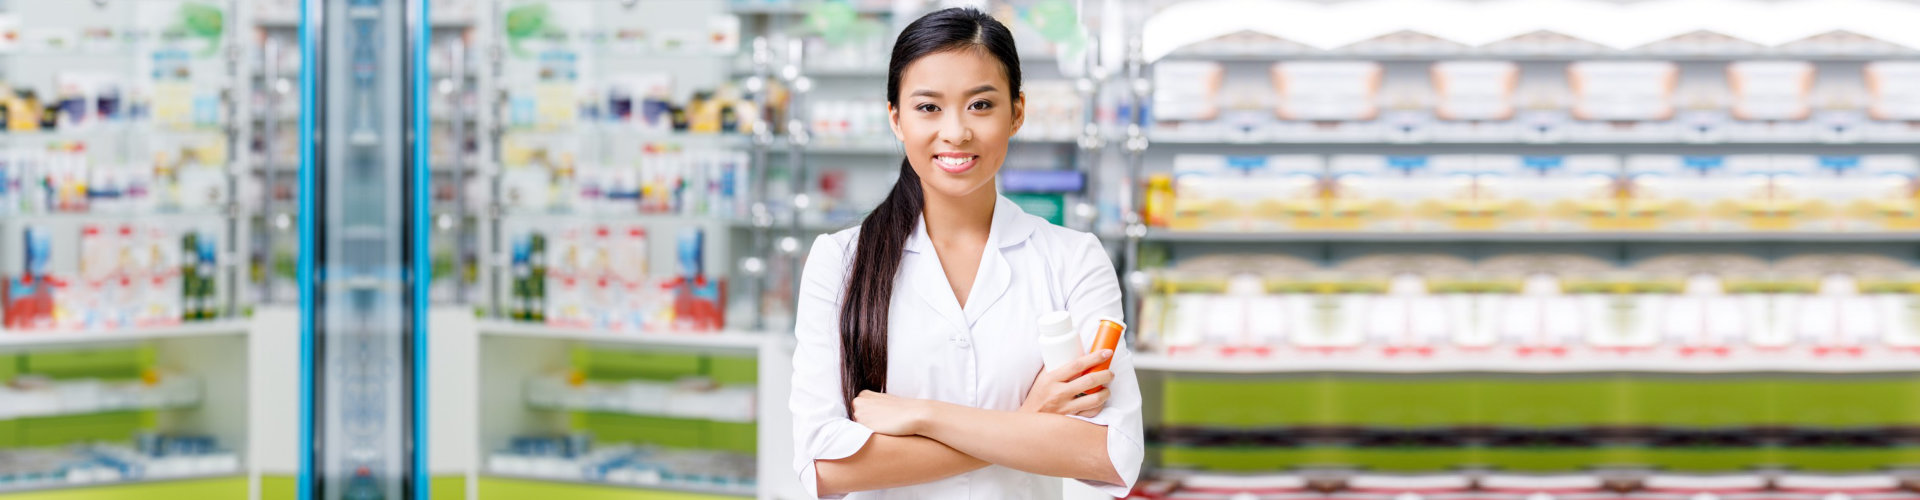 image of a female pharmacist